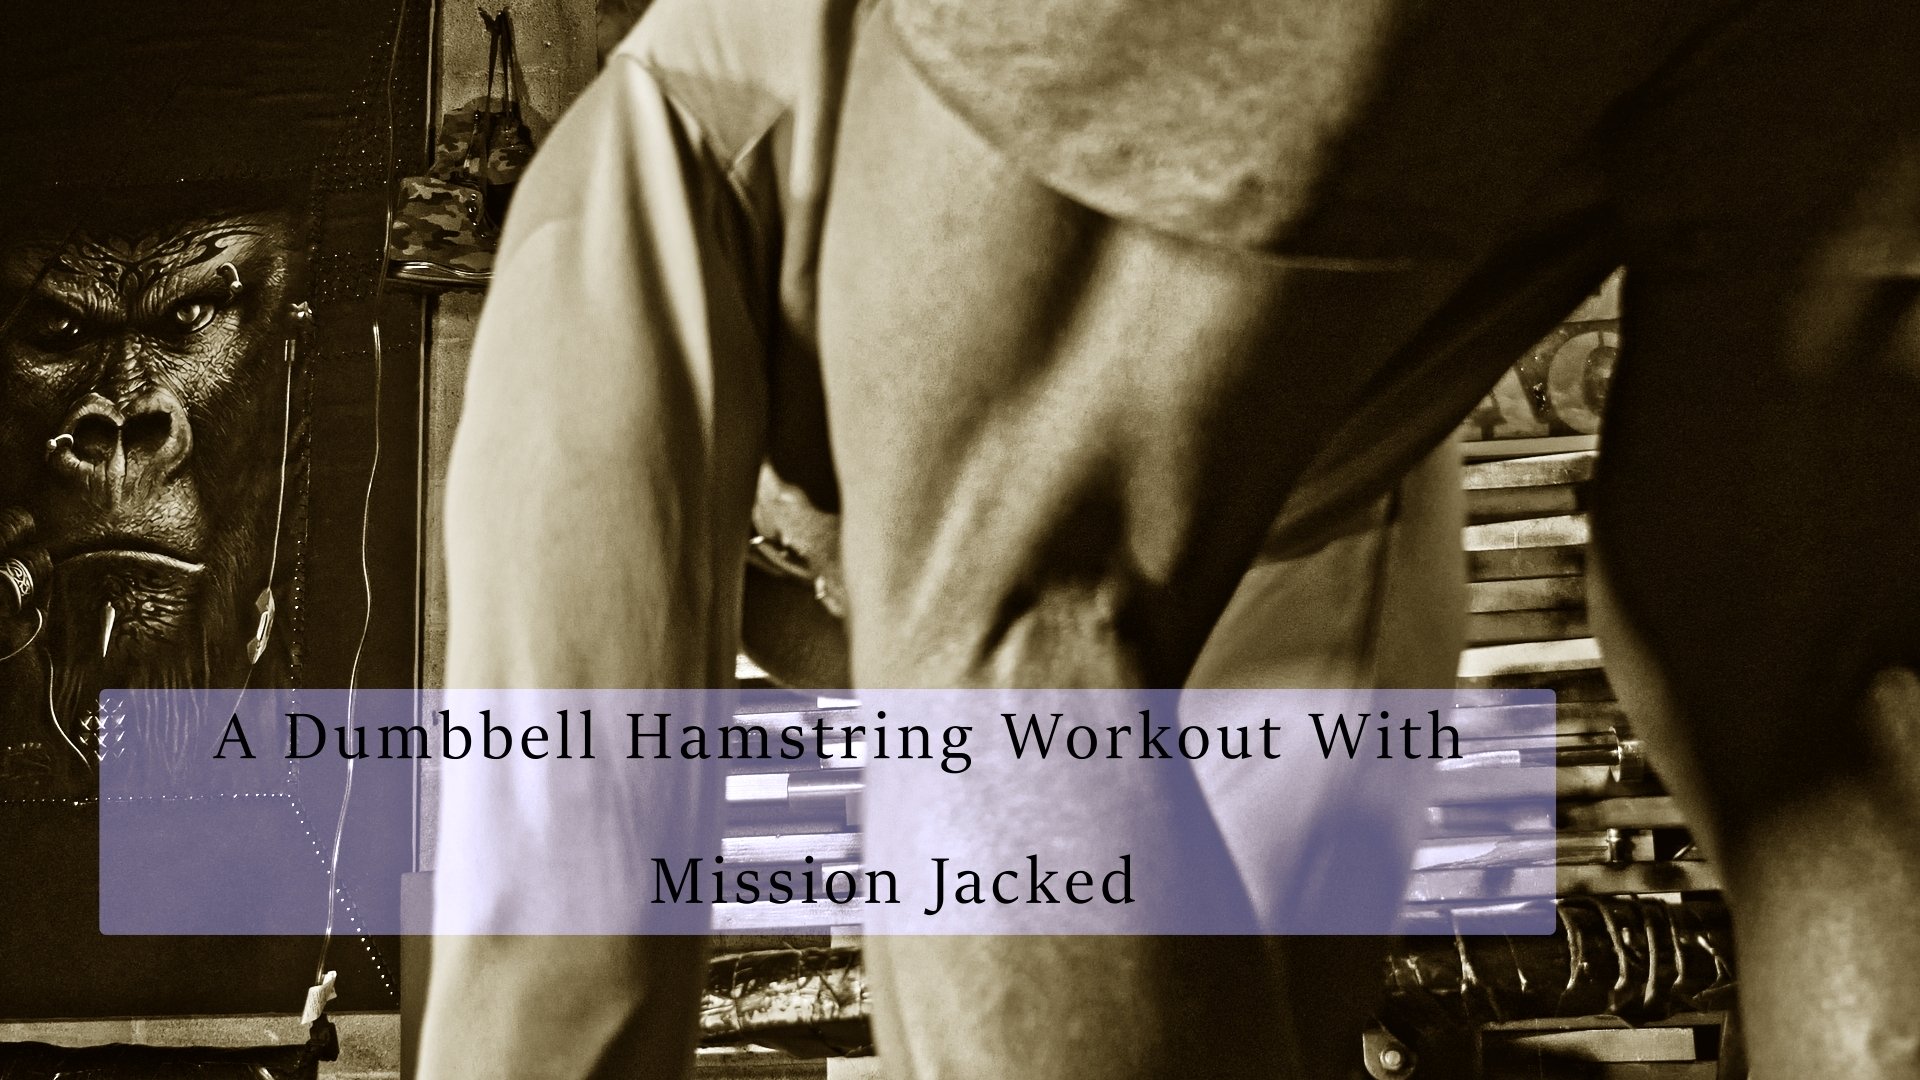 Dumbbell Hamstring Workout
dumbbell exercises for hamstrings
hamstrings with dumbbells
hamstring workouts with weights
free weight exercises for hamstrings